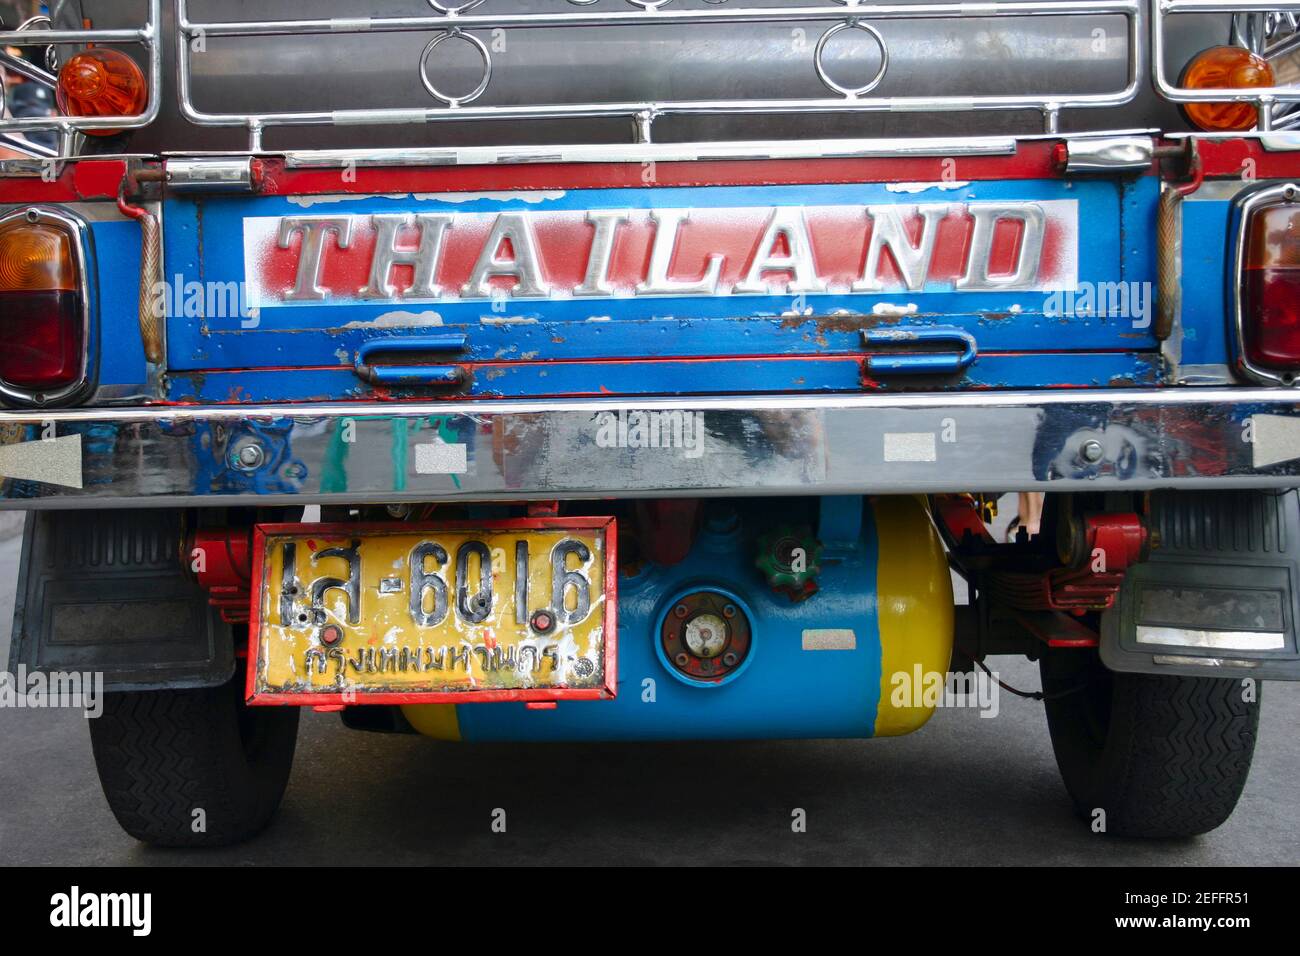 Close-up of a license plate of a land vehicle, Bangkok, Thailand Stock Photo